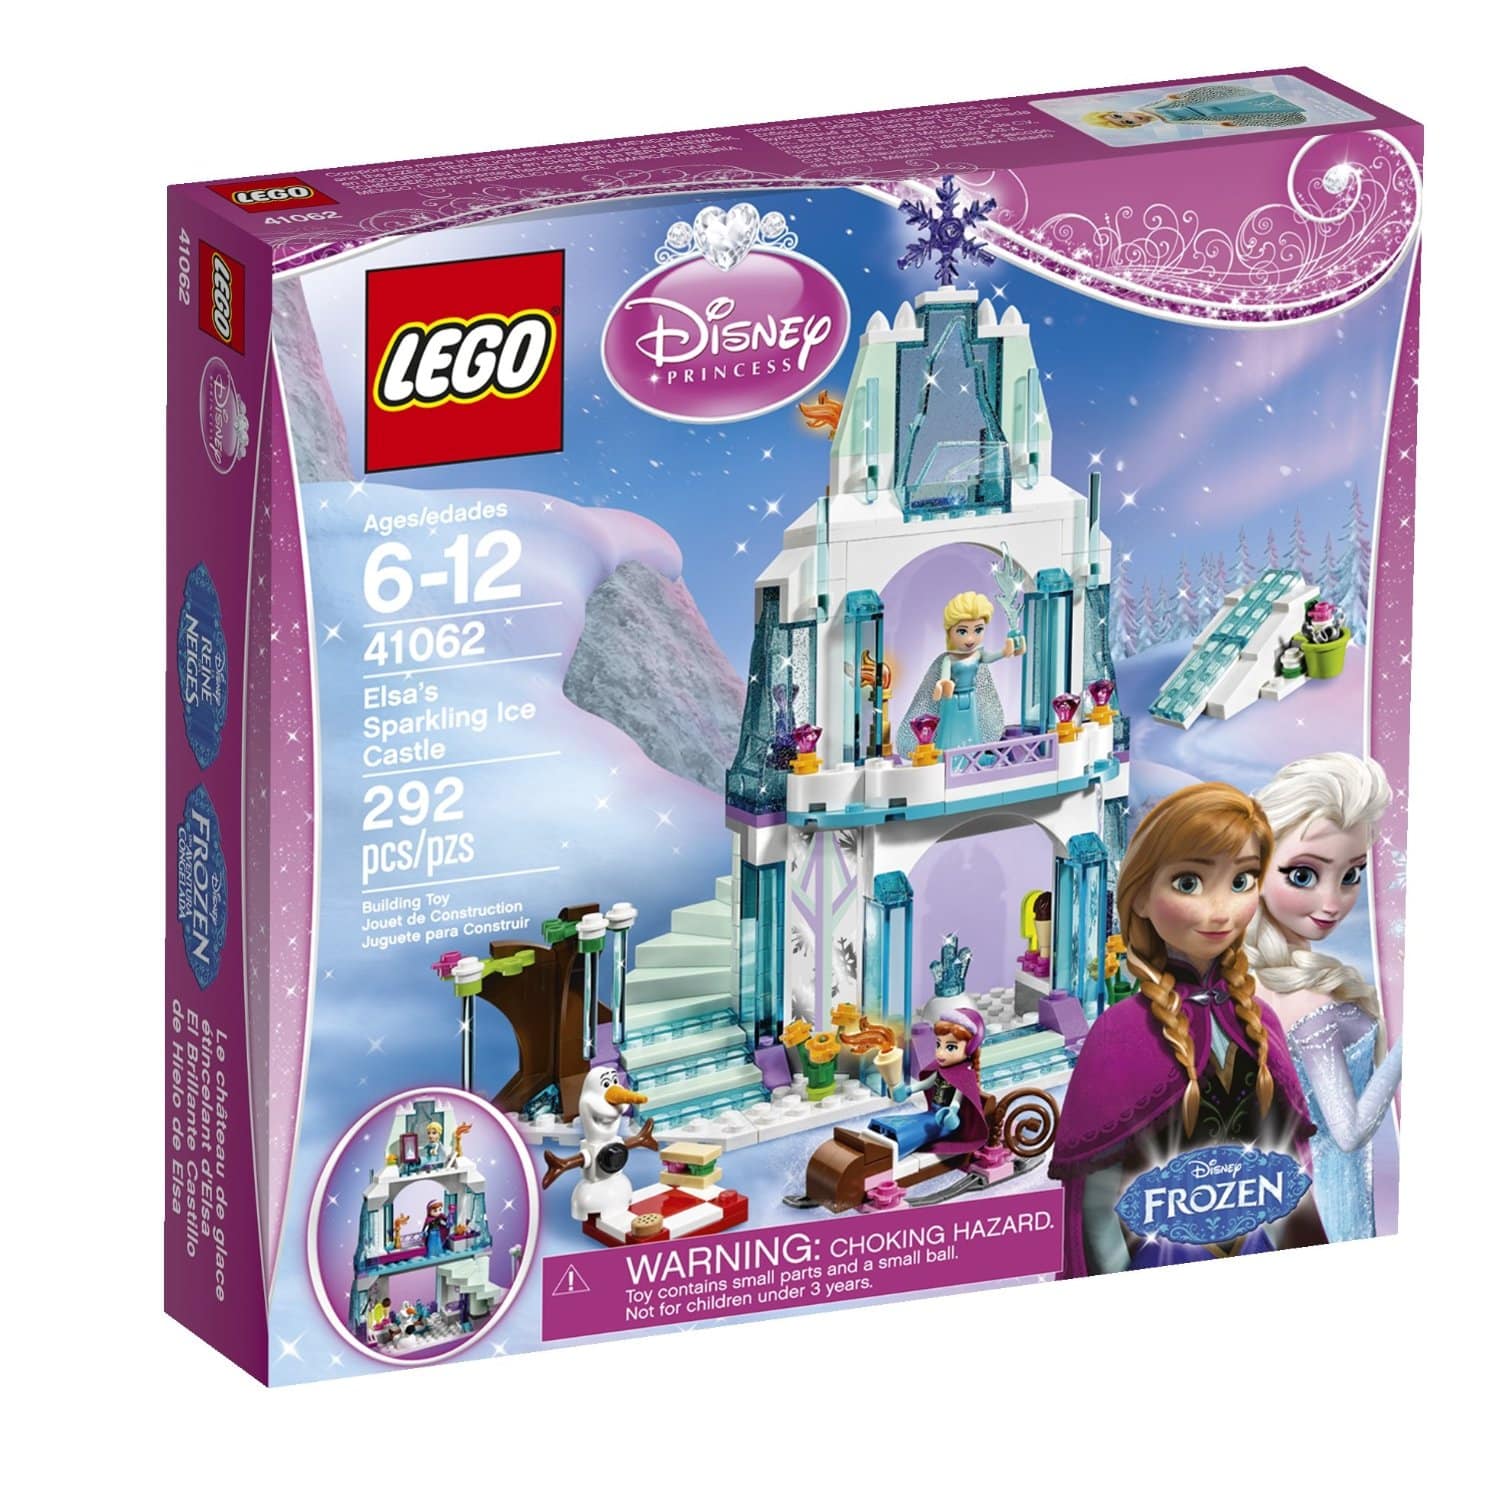 DEAL ALERT: LEGO Disney Princess Elsa’s Sparkling Ice Castle